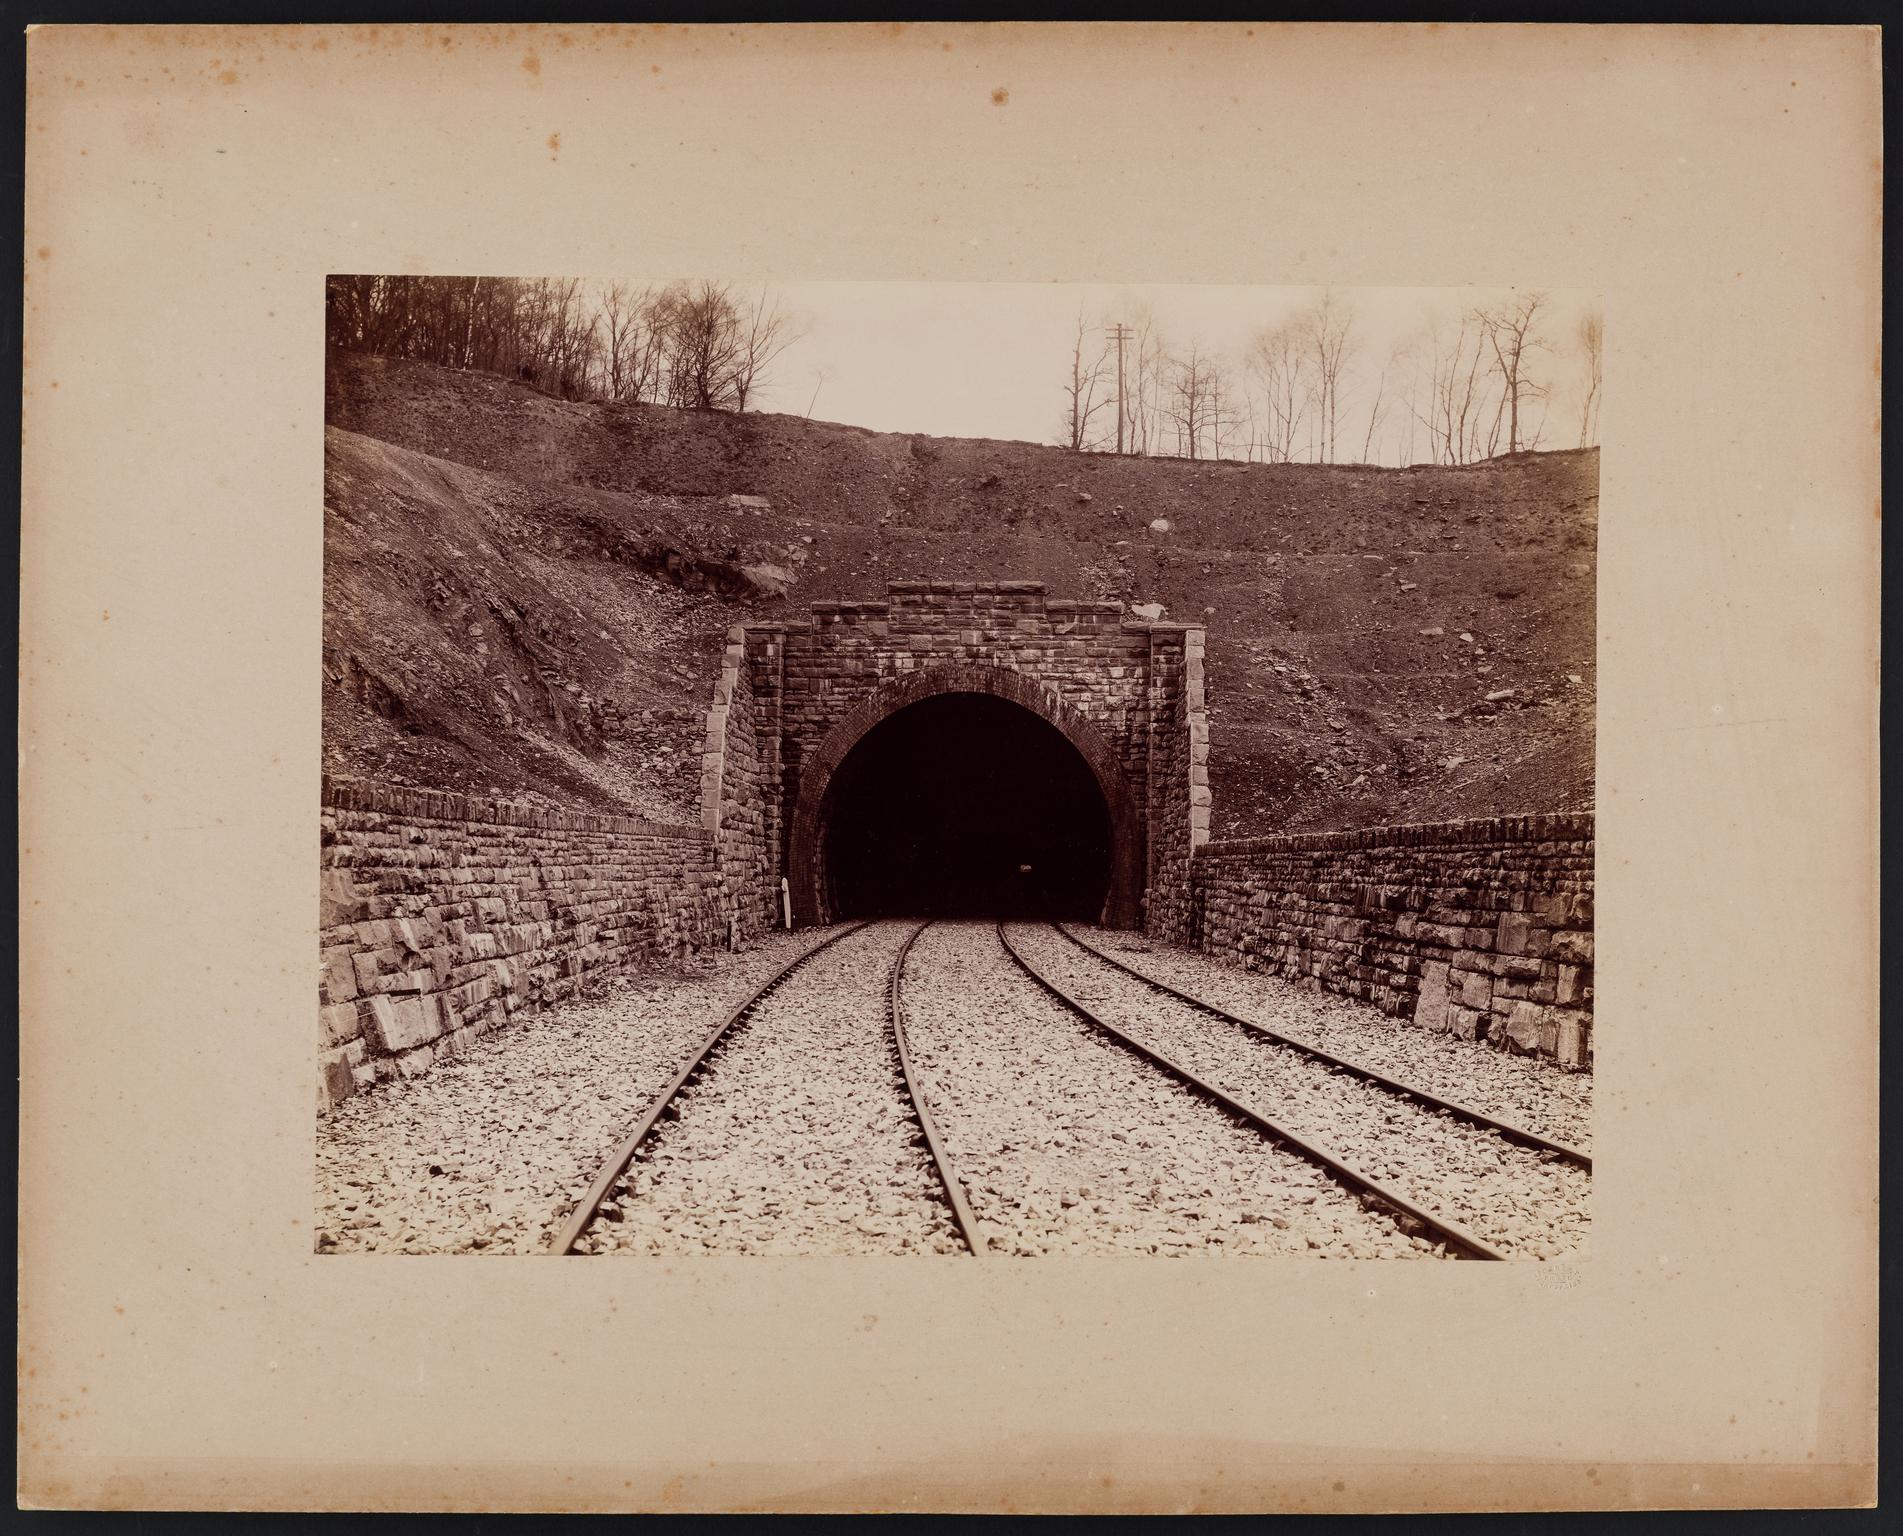 Barry Railway, photograph